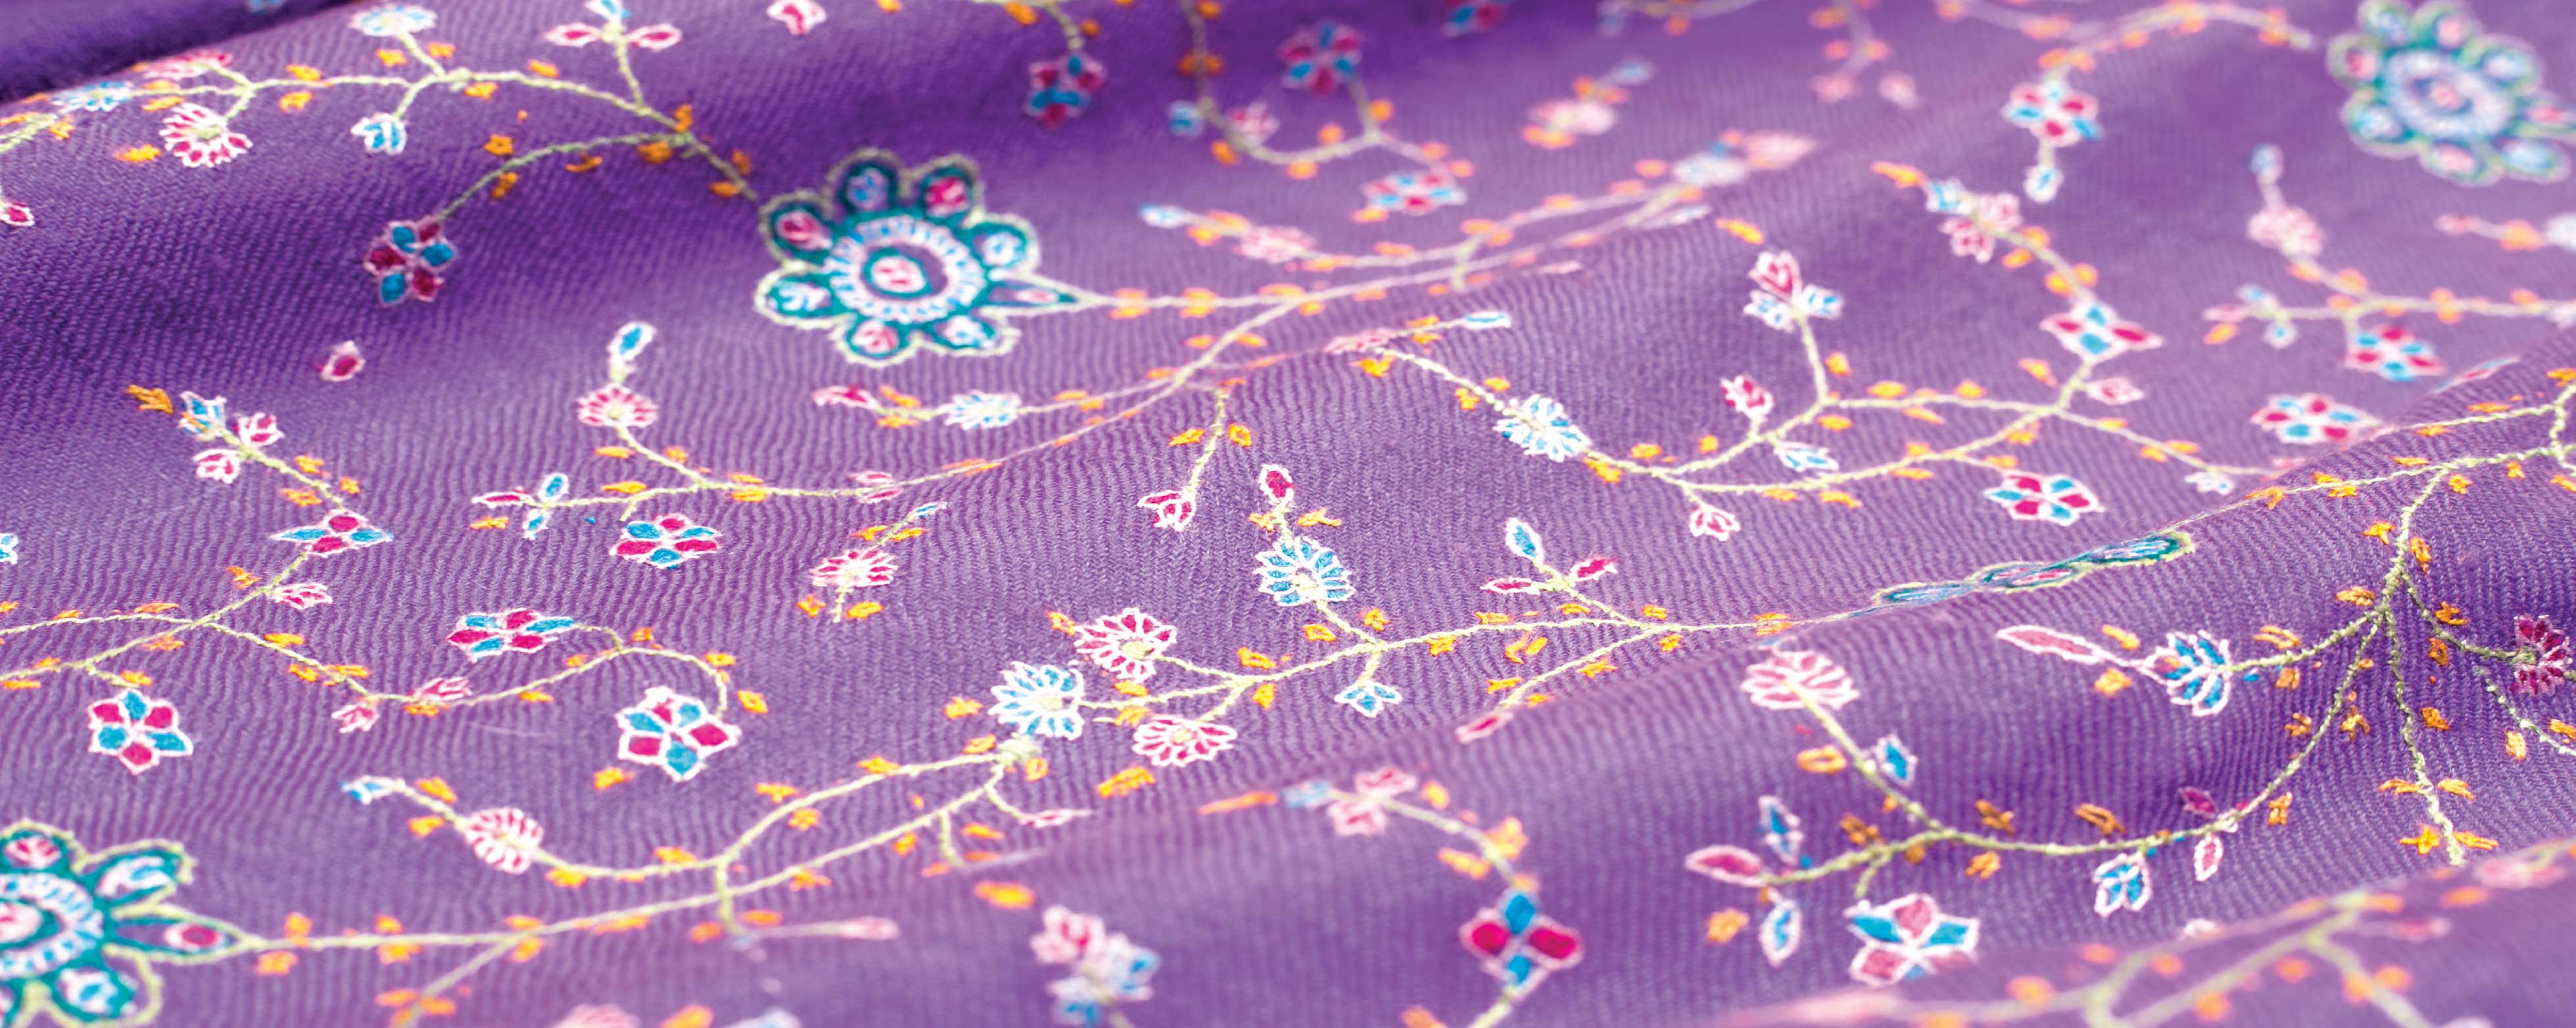 Embroidery Pashmina